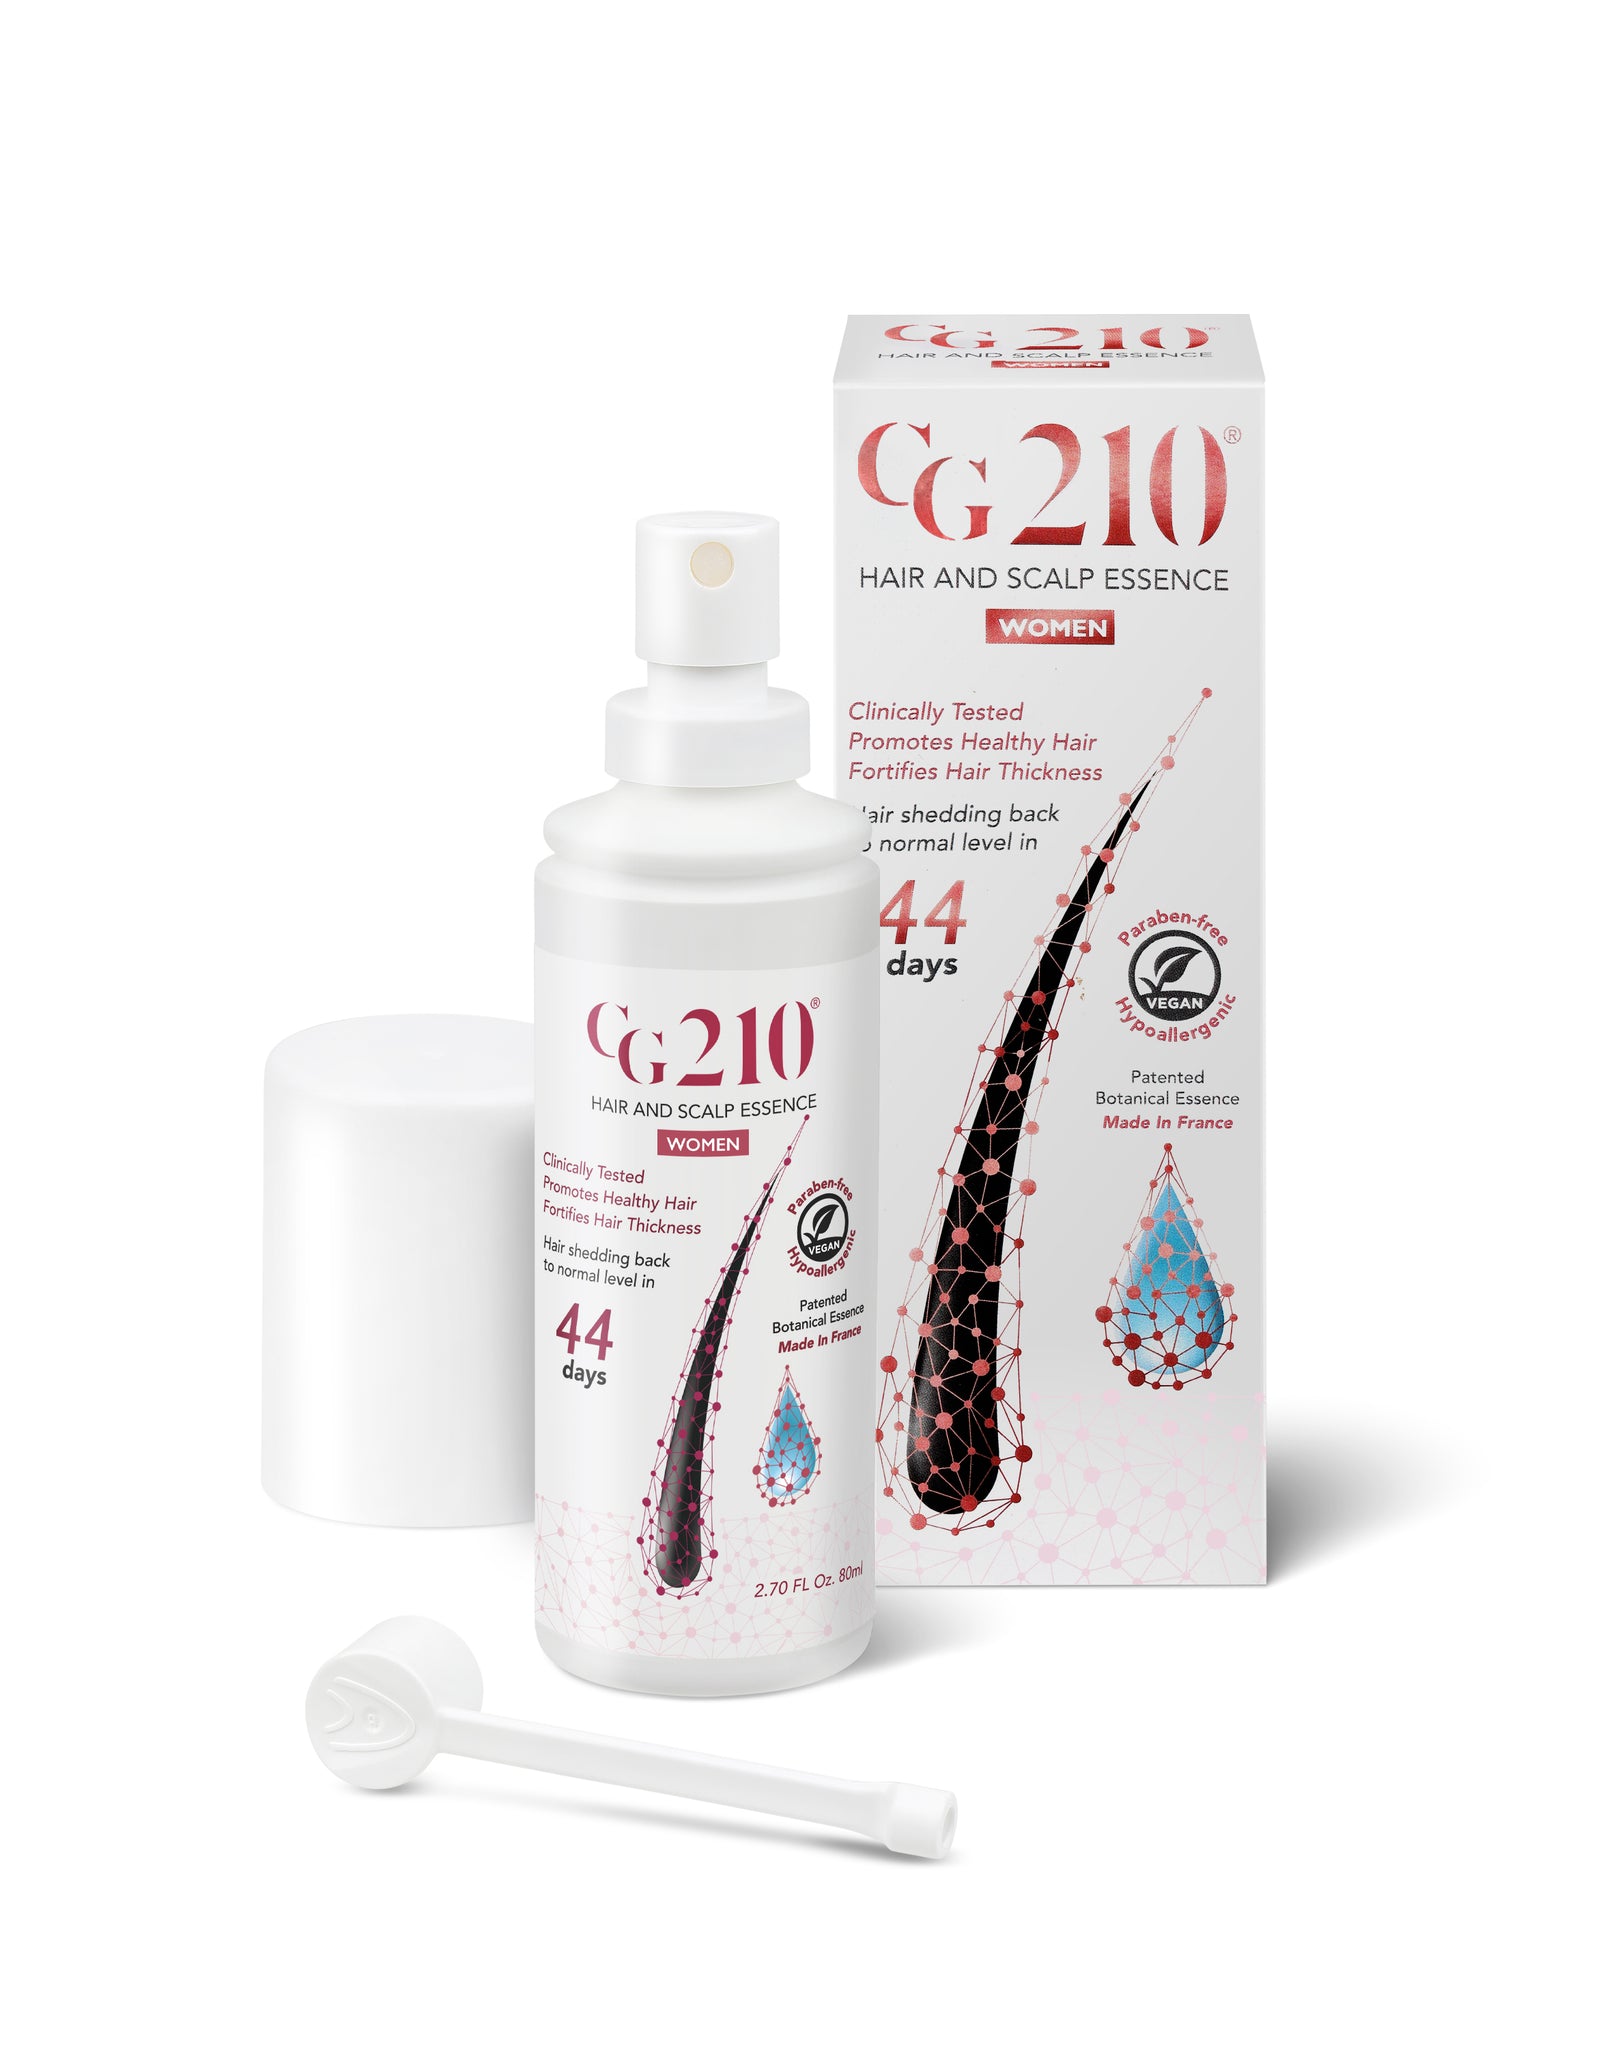 CG 210™ Hair And Scalp Essence (Women)